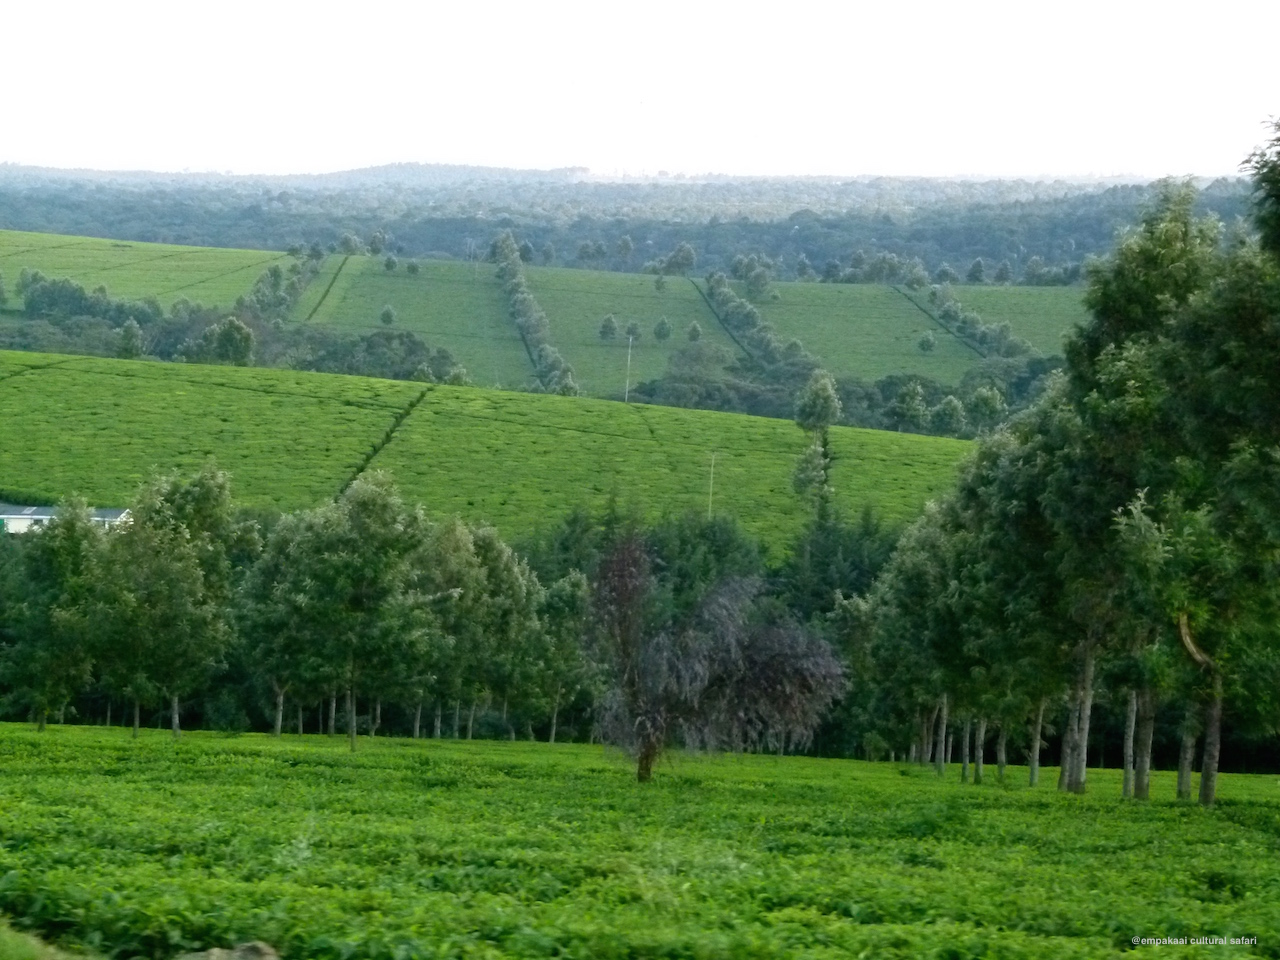 Kericho is all about tea, with its green tea fields extending till the horizon